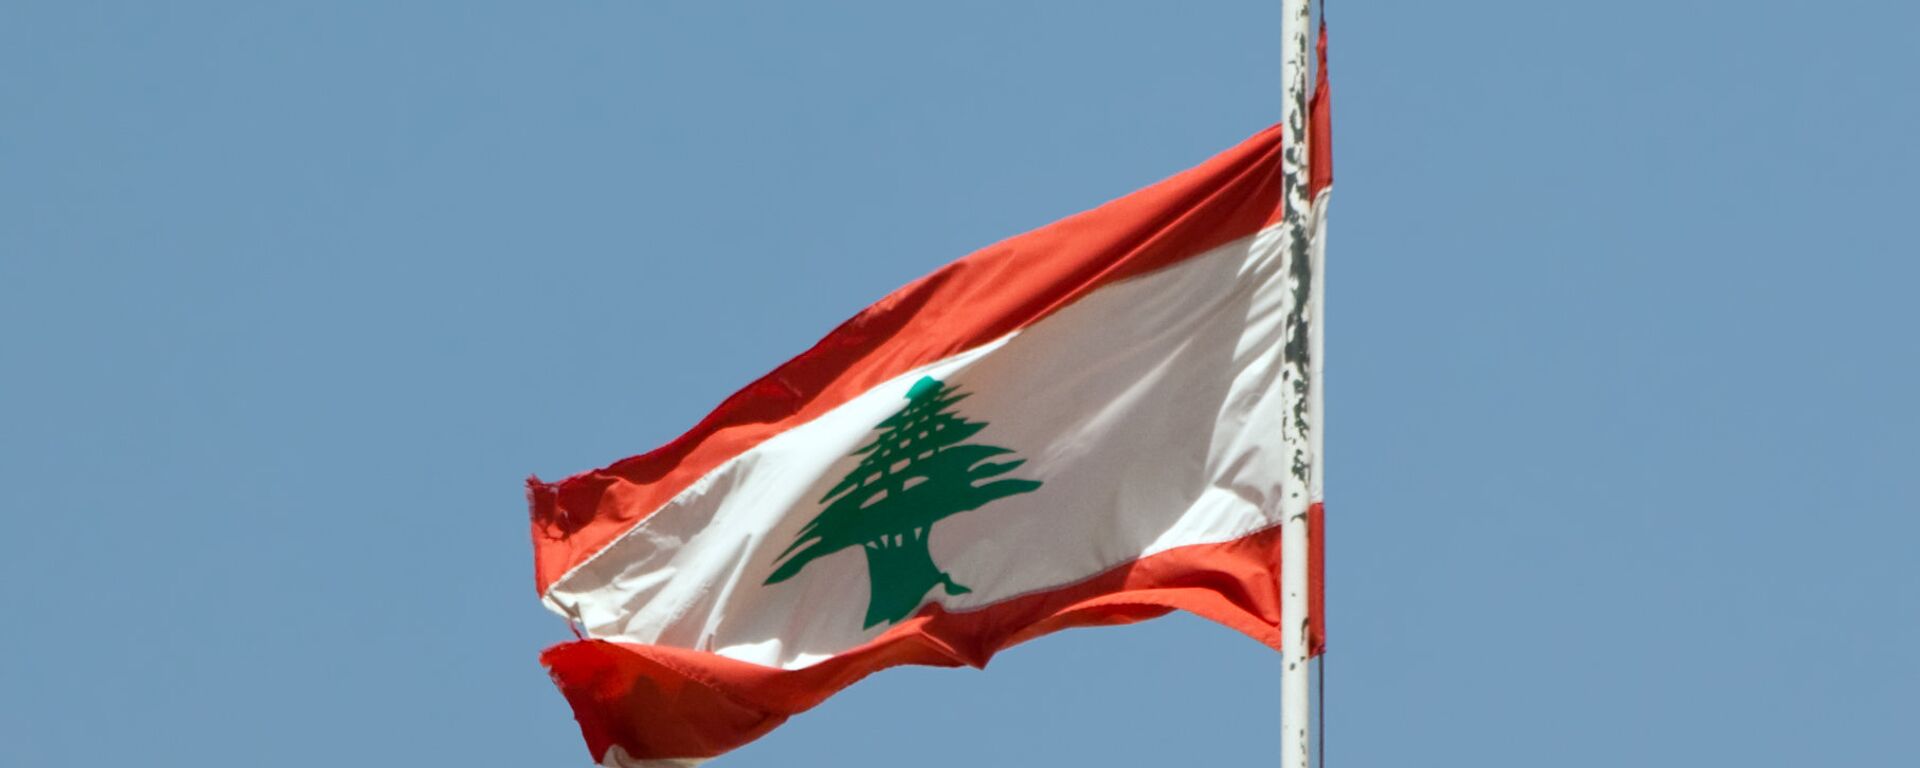 Bandera del Líbano - Sputnik Mundo, 1920, 21.09.2021